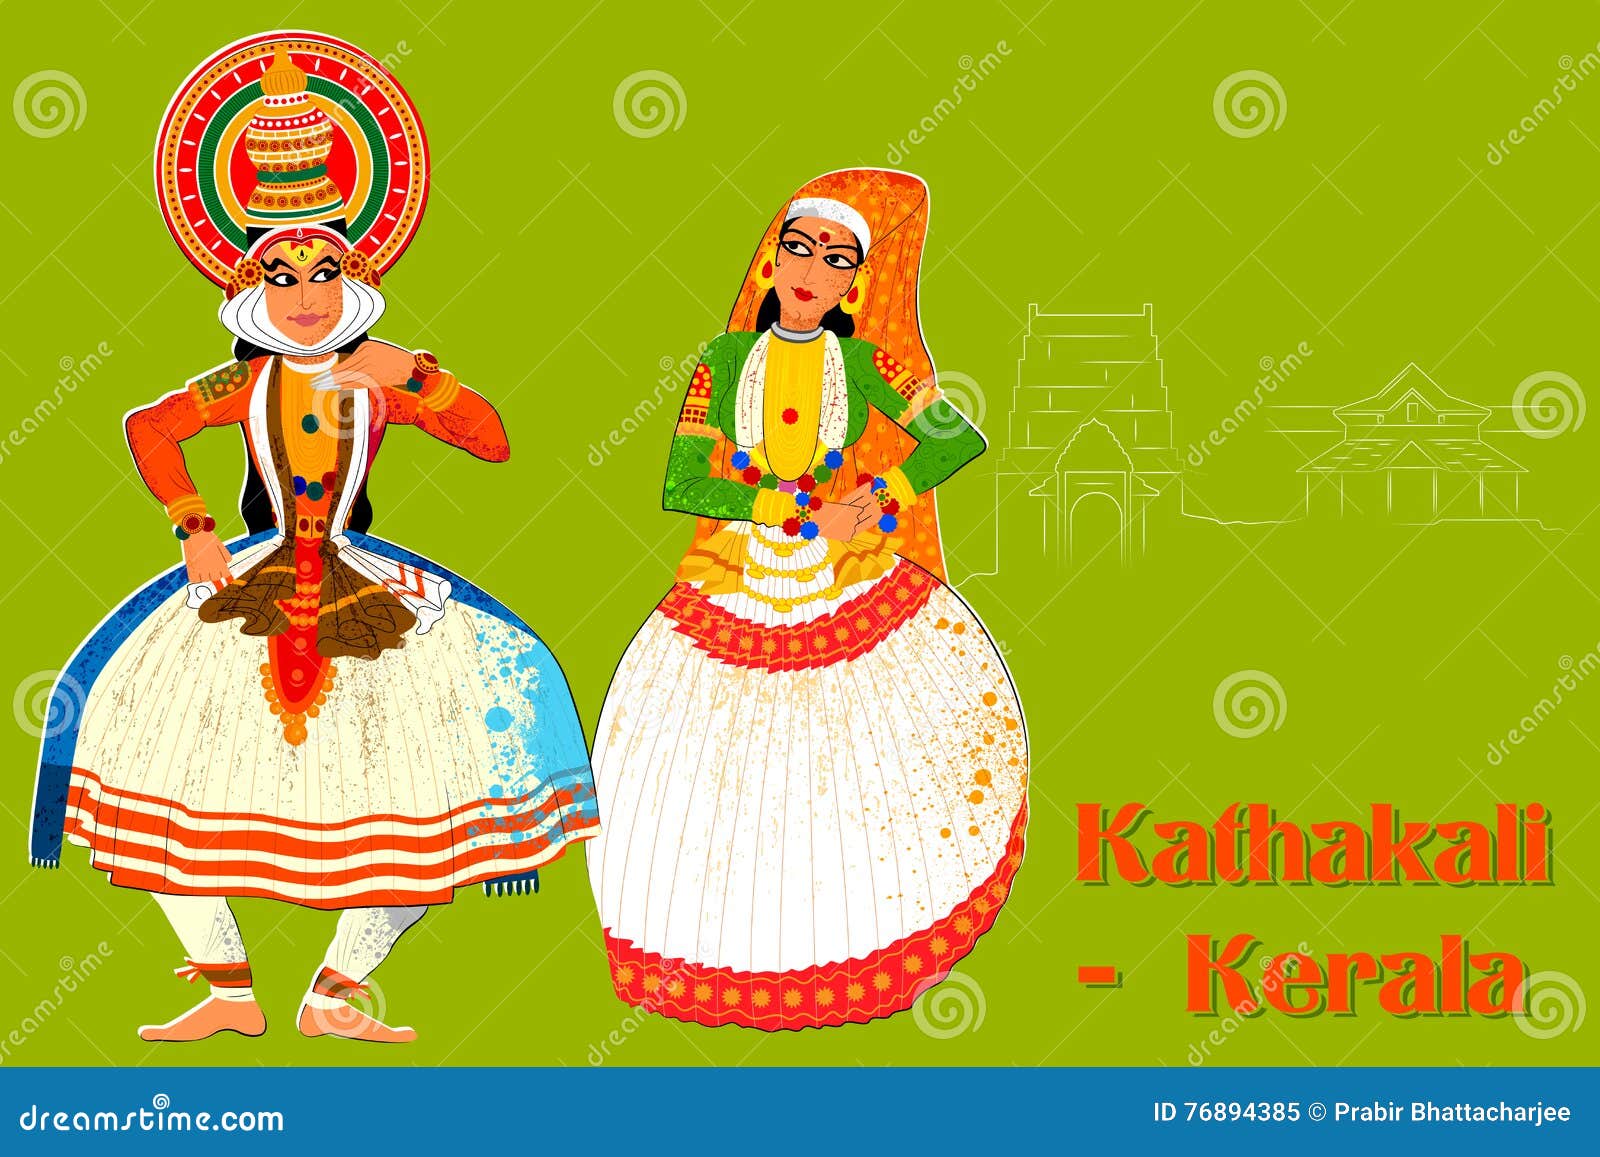 couple performing kathakali classical dance of kerala, india